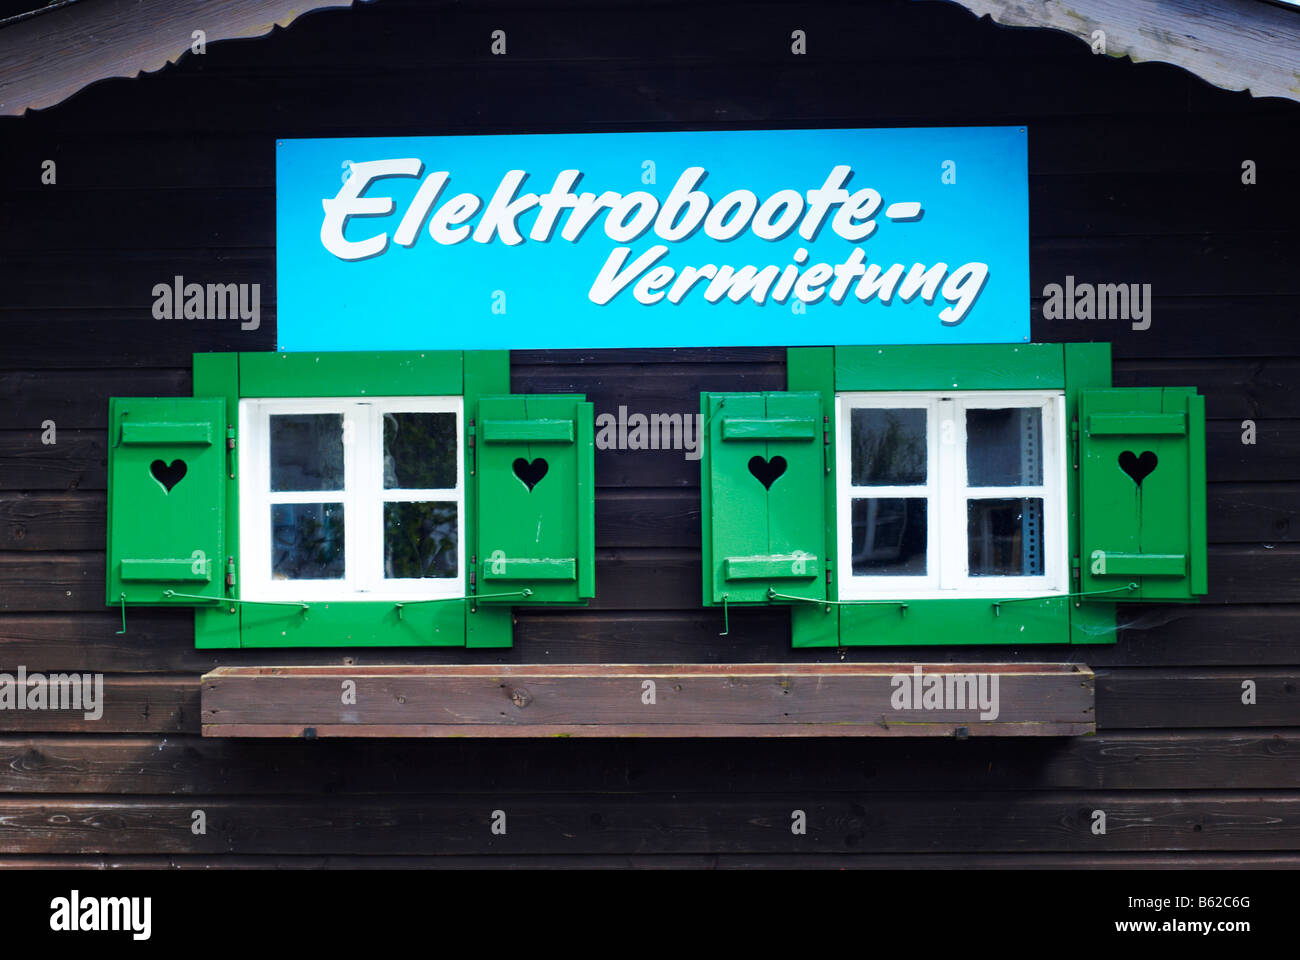 Sign Elektroboote Vermietung, electric boat rentals, Unterach on Attersee Lake, Upper Austria, Austria, Europe Stock Photo